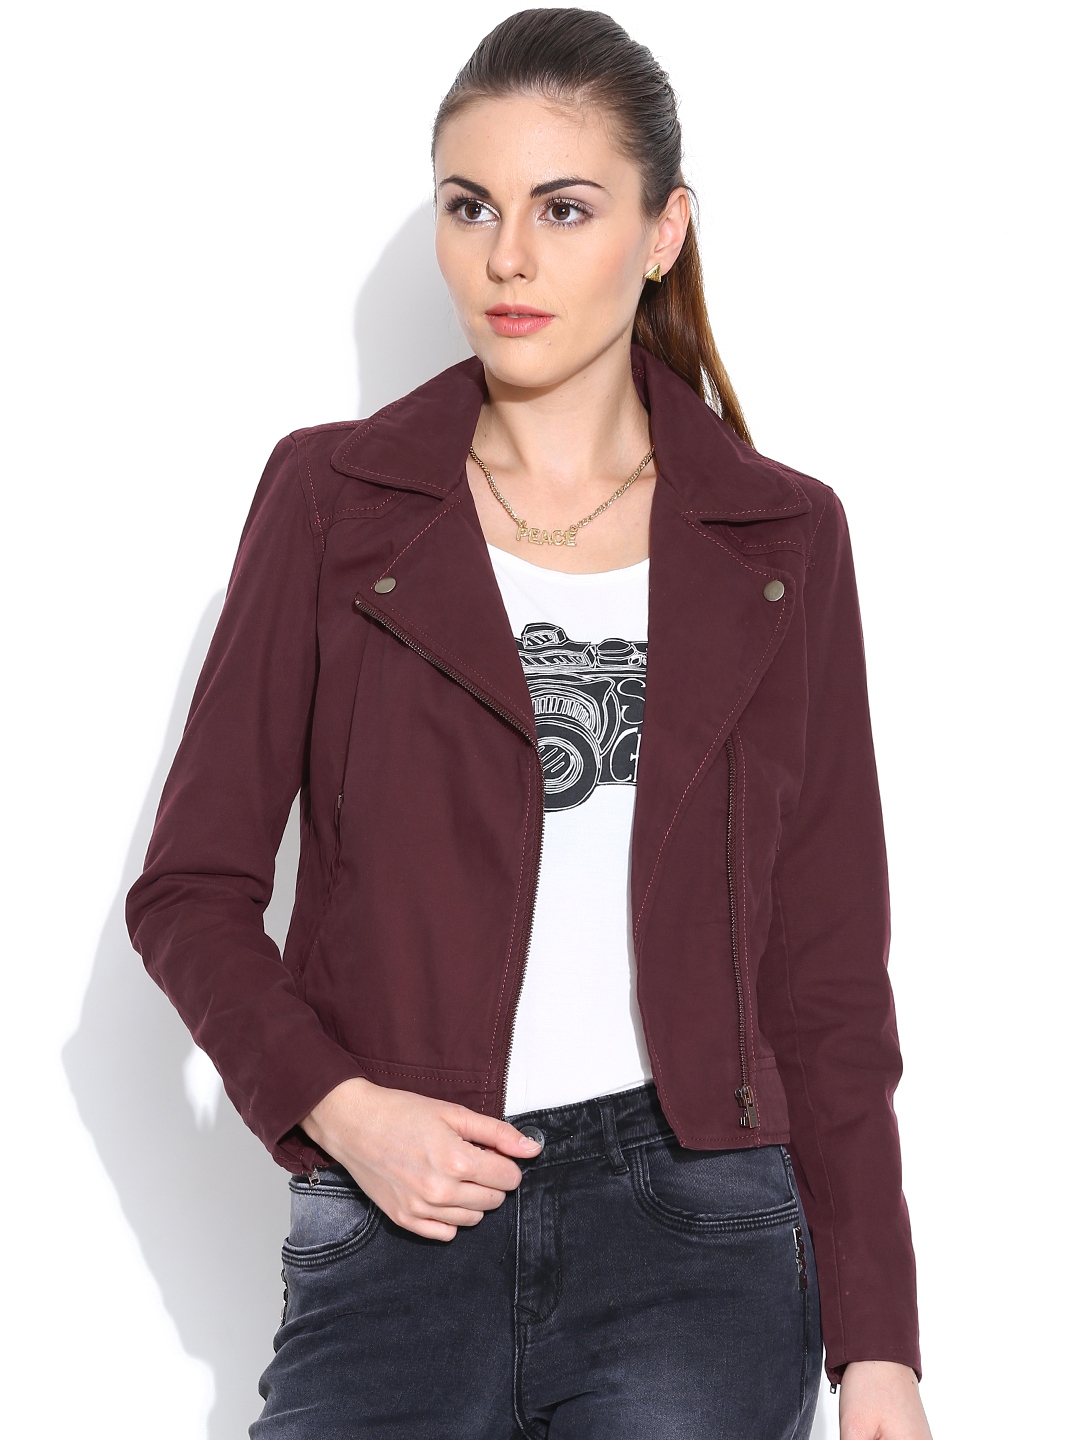 Buy Levis Burgundy Jacket - Jackets for Women 1026466 | Myntra